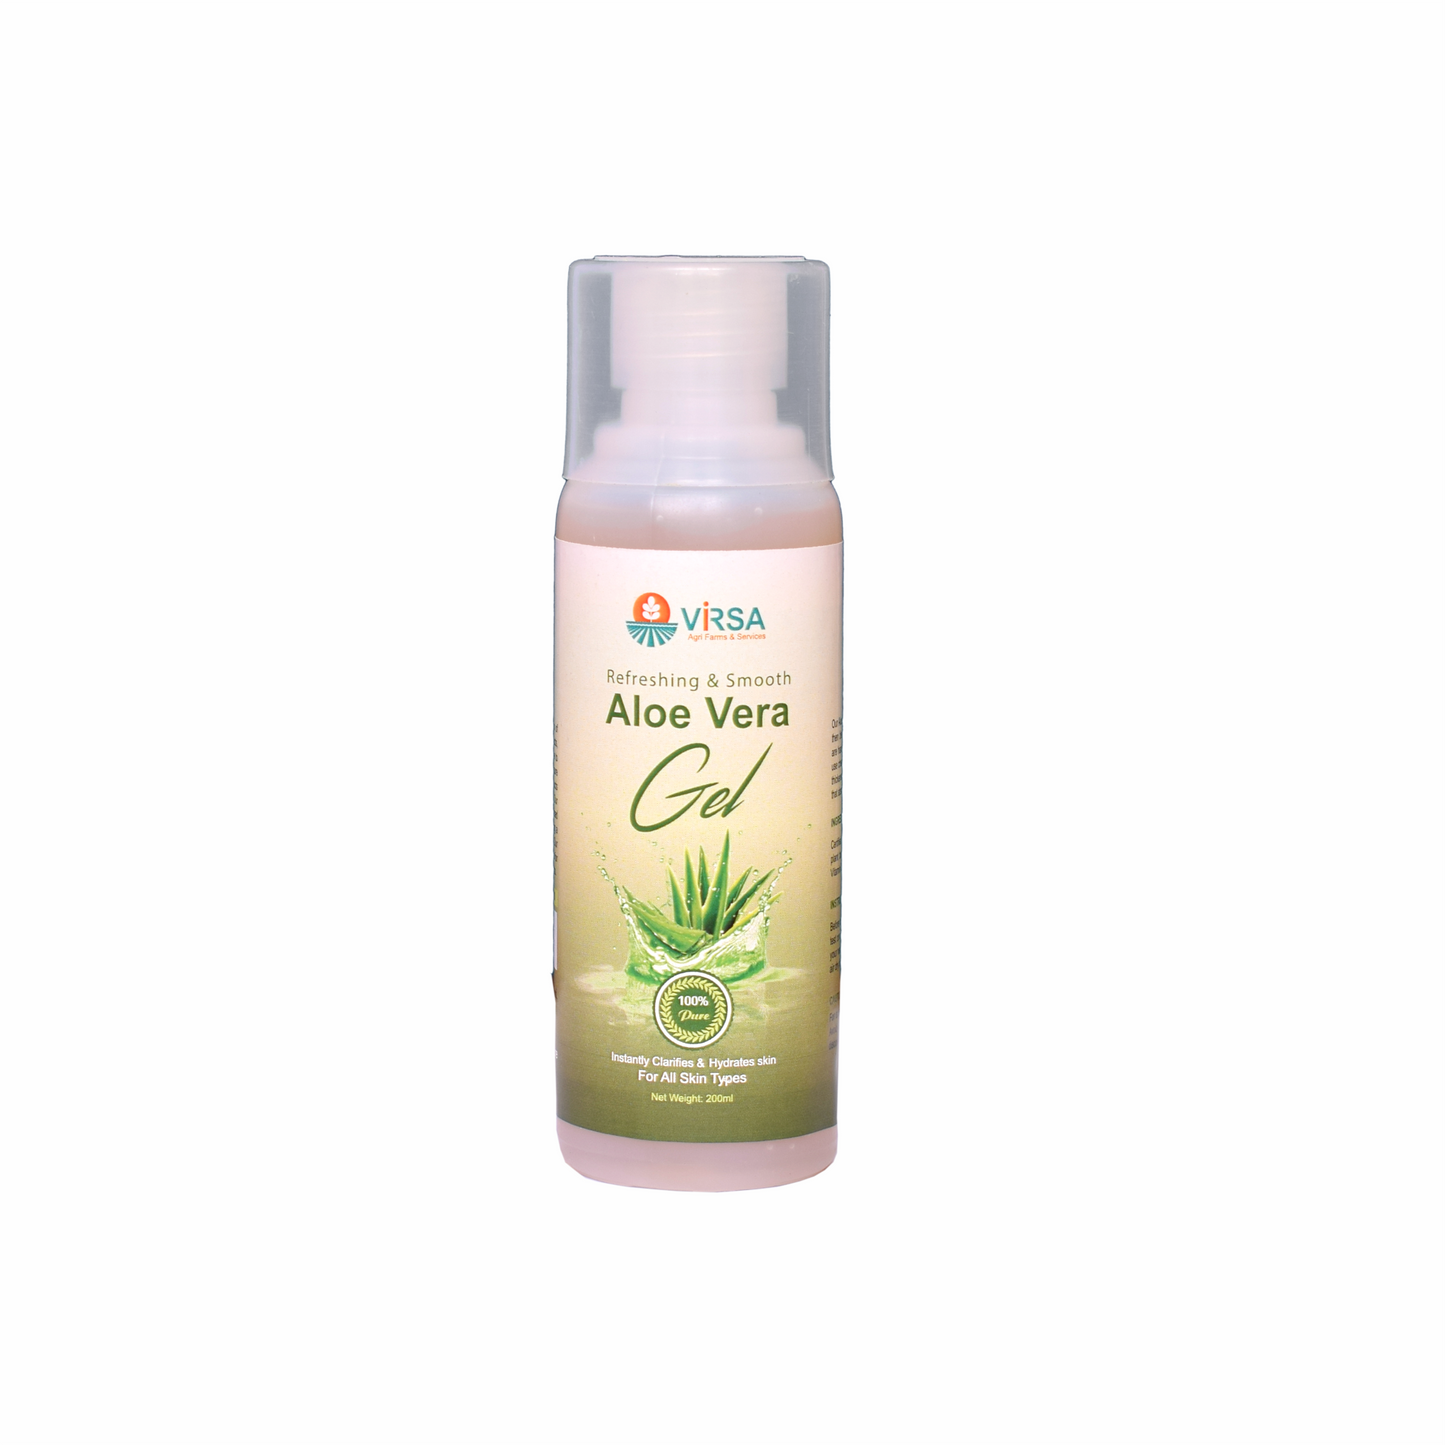 Aloe Vera Hair gel